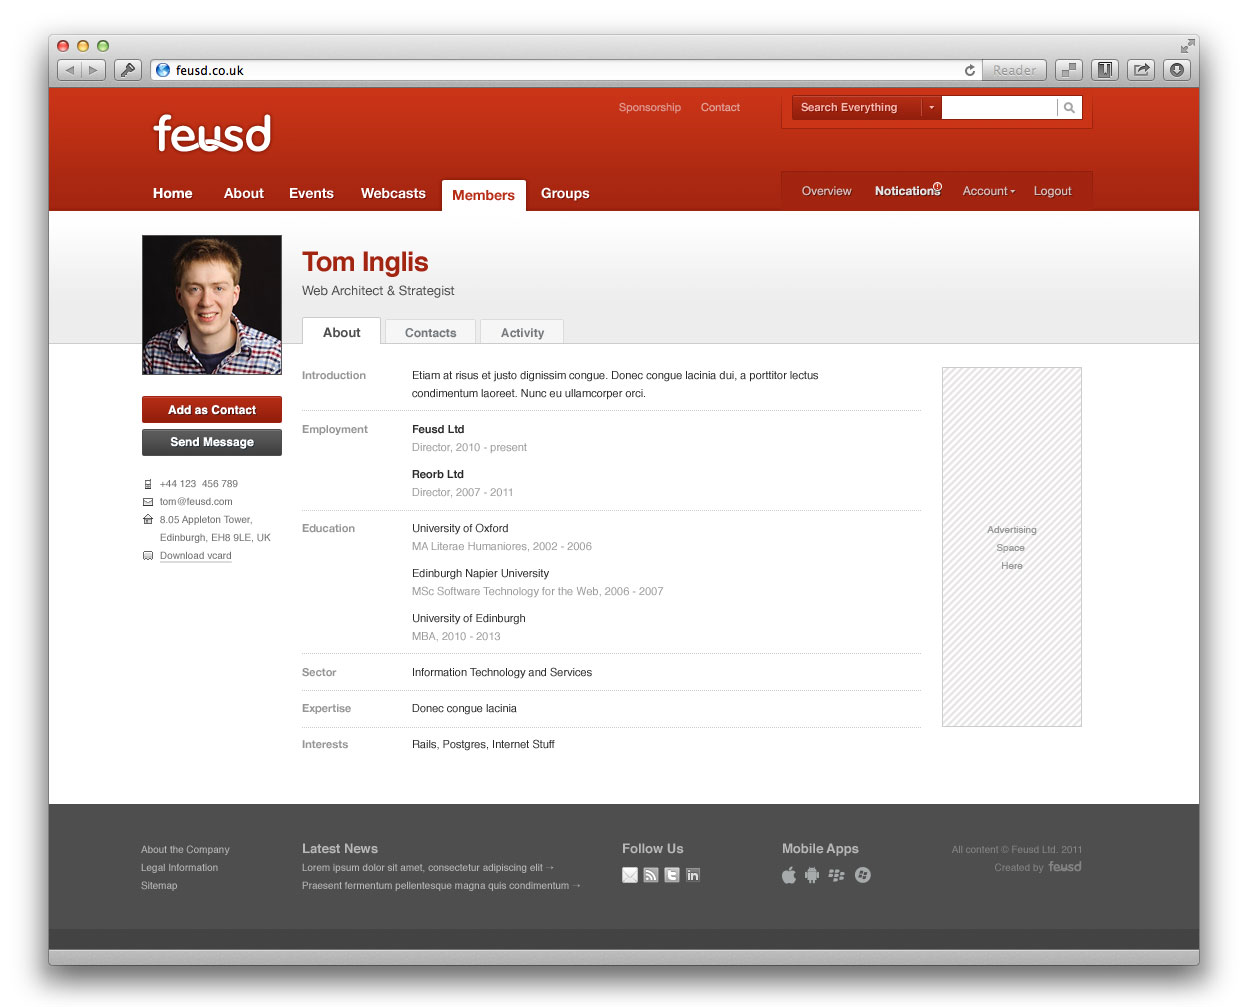 User Interface Design for
Feusd